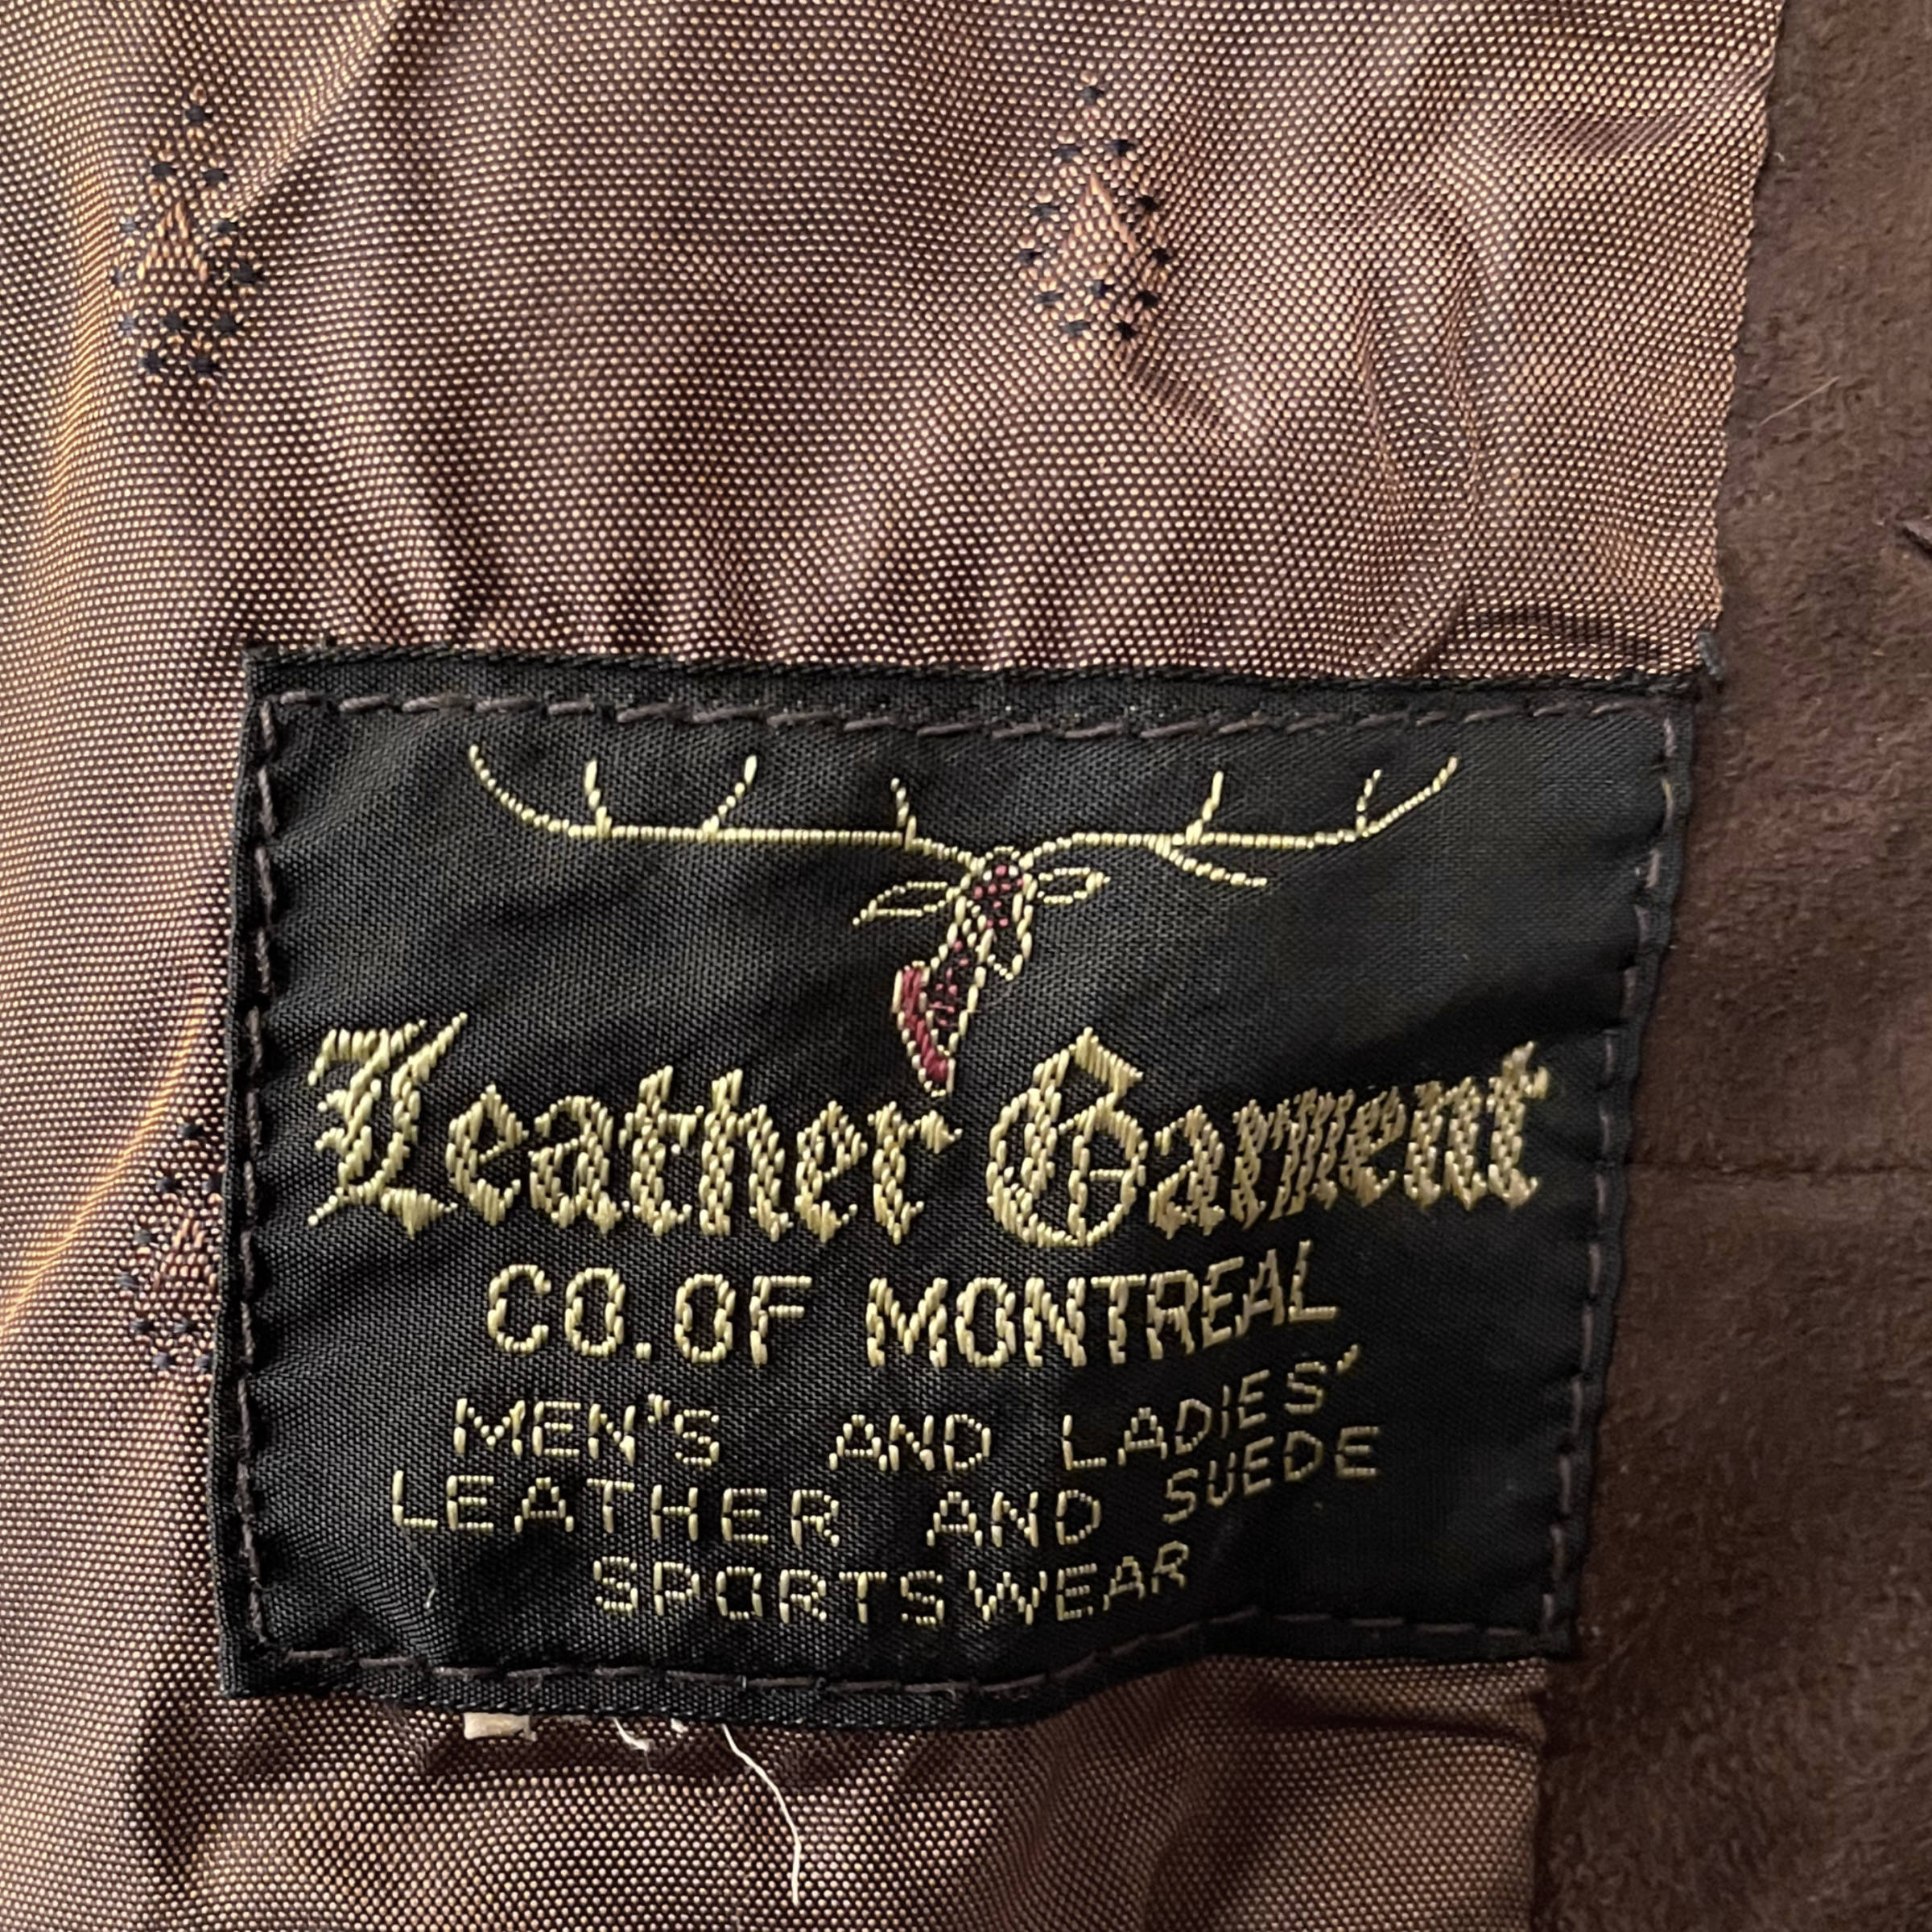 Vintage 1950s Suede Leather Fringed Jacket Davy Crockett S